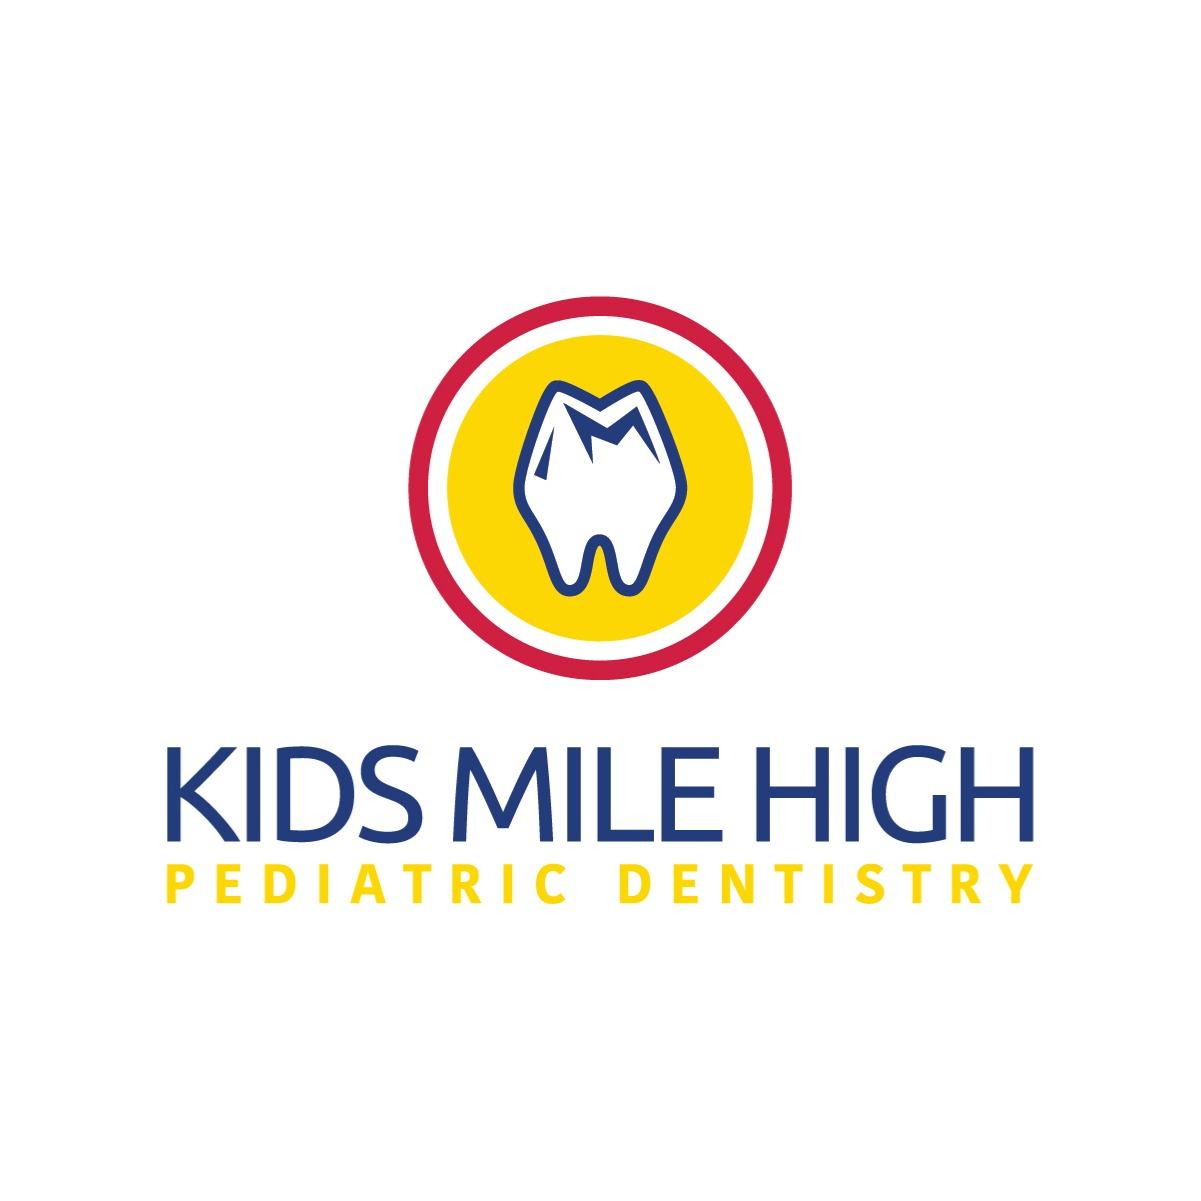 Kids Mile High Pediatric Dentistry - Central Park - Denver, CO 80238 - (303)399-5437 | ShowMeLocal.com